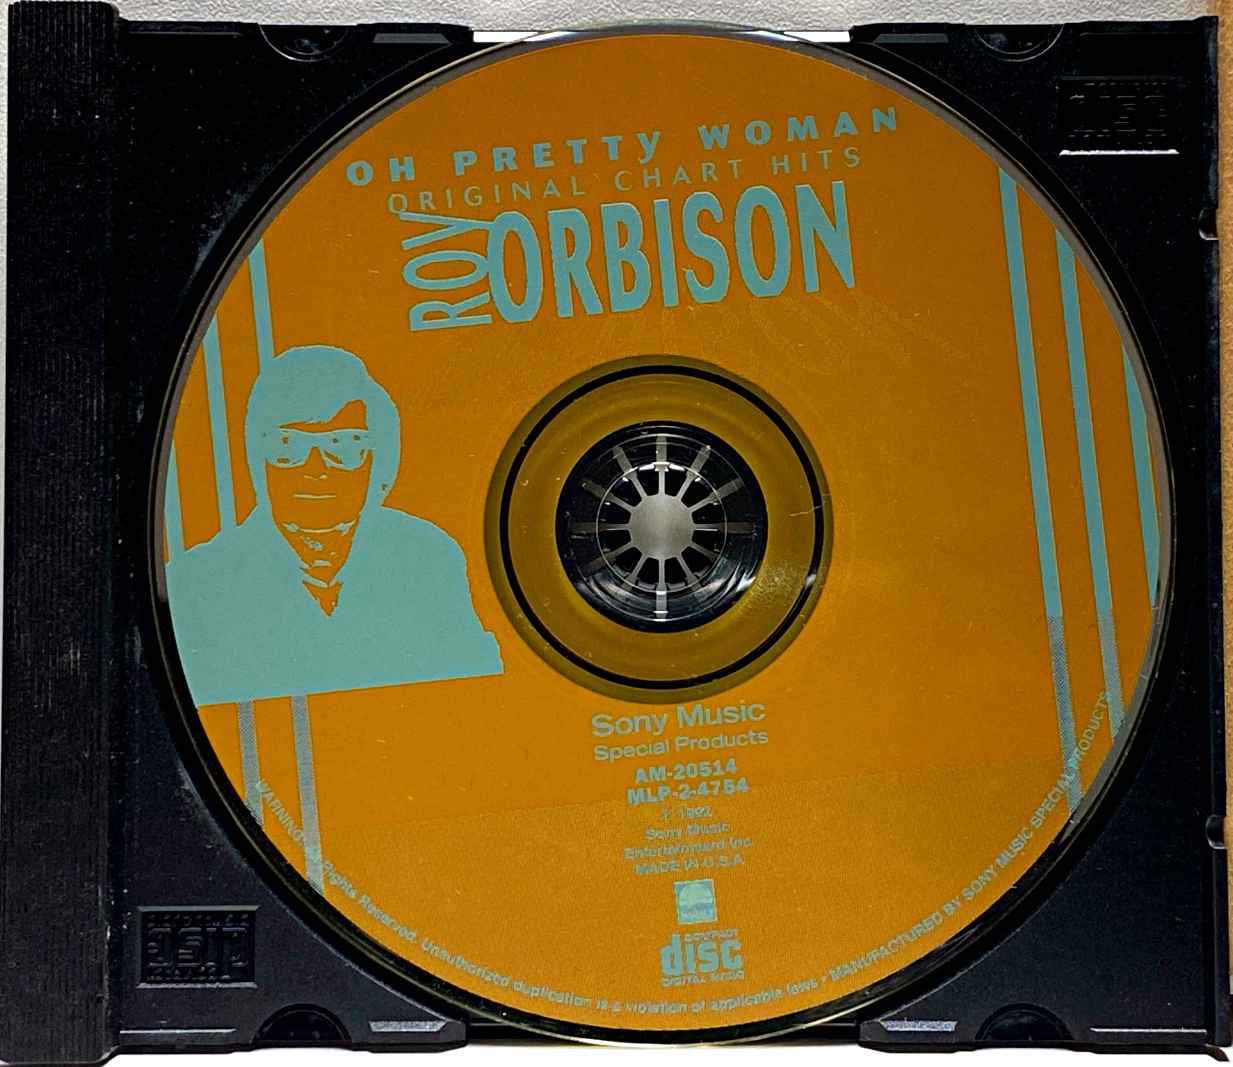 CD Roy Orbison – Oh Pretty Woman - Original Chart Hits